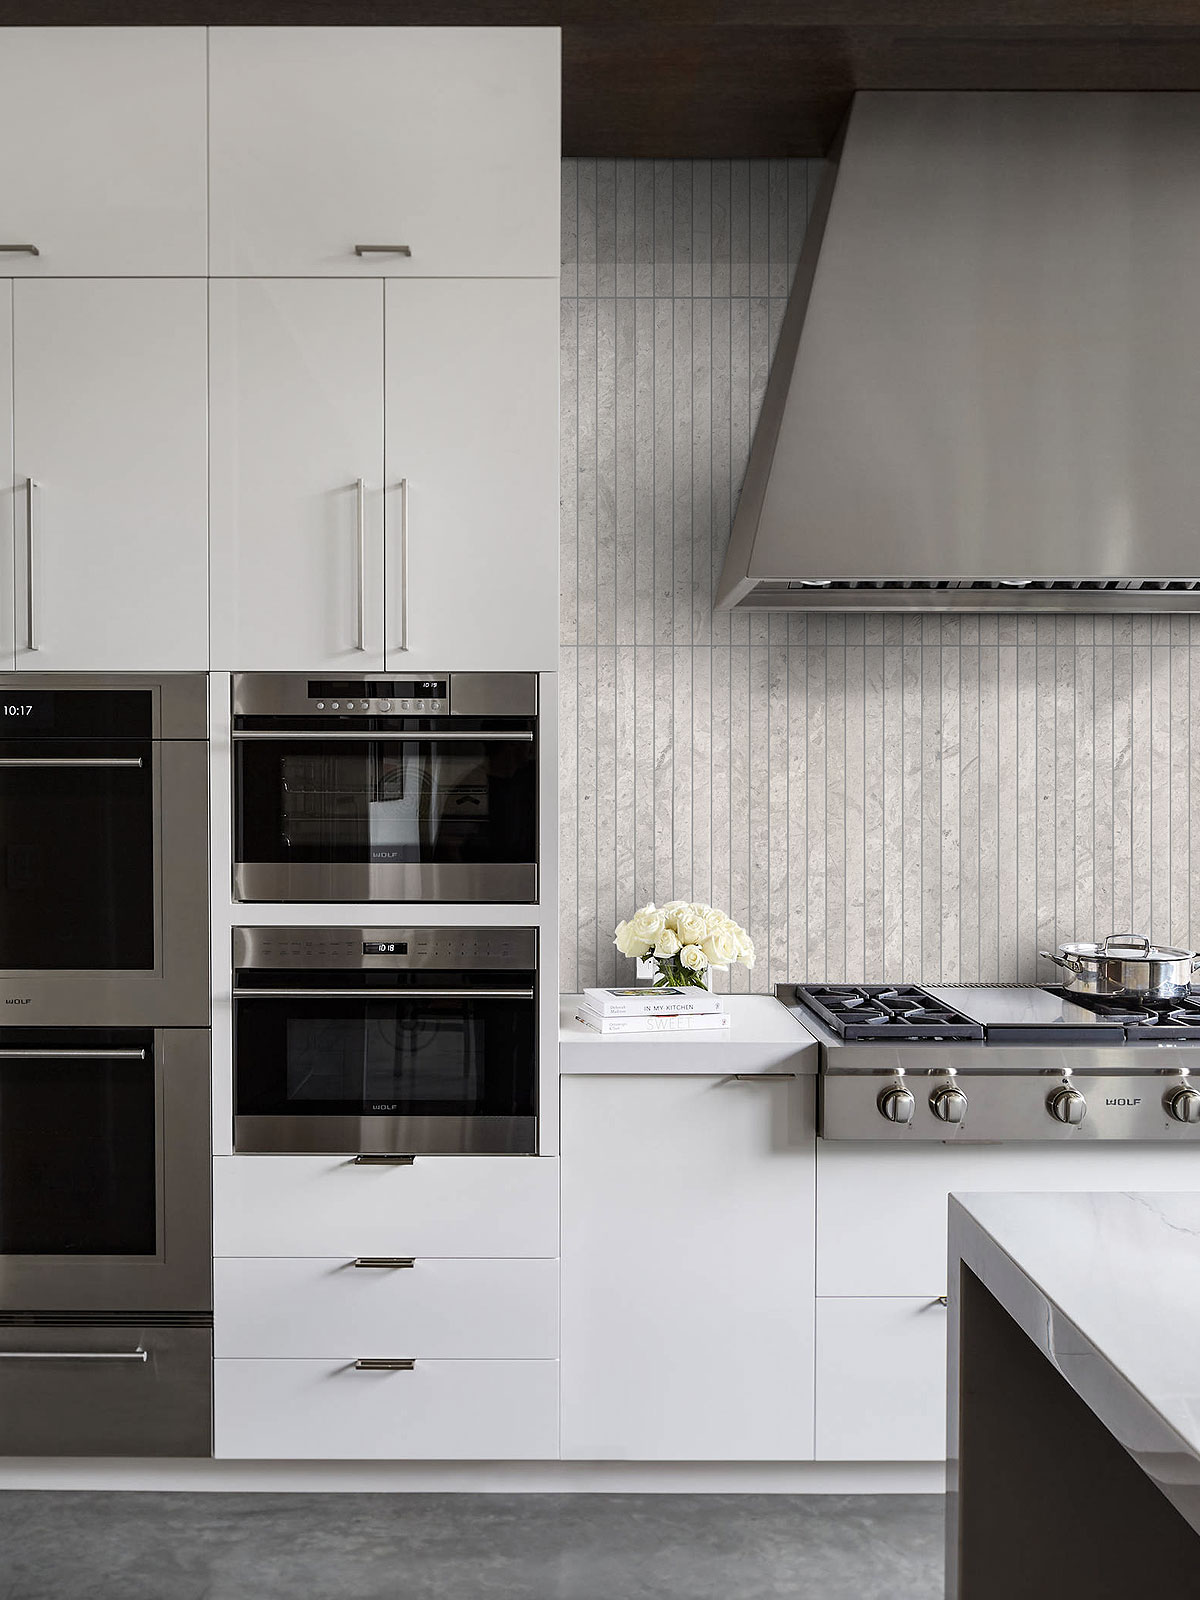 Modern white gray kitchen backsplash tile BA1038 #graybacksplash #limestonebacksplash #modernbacksplash #modernkitchen #graykitchen #graycabinetbacksplash